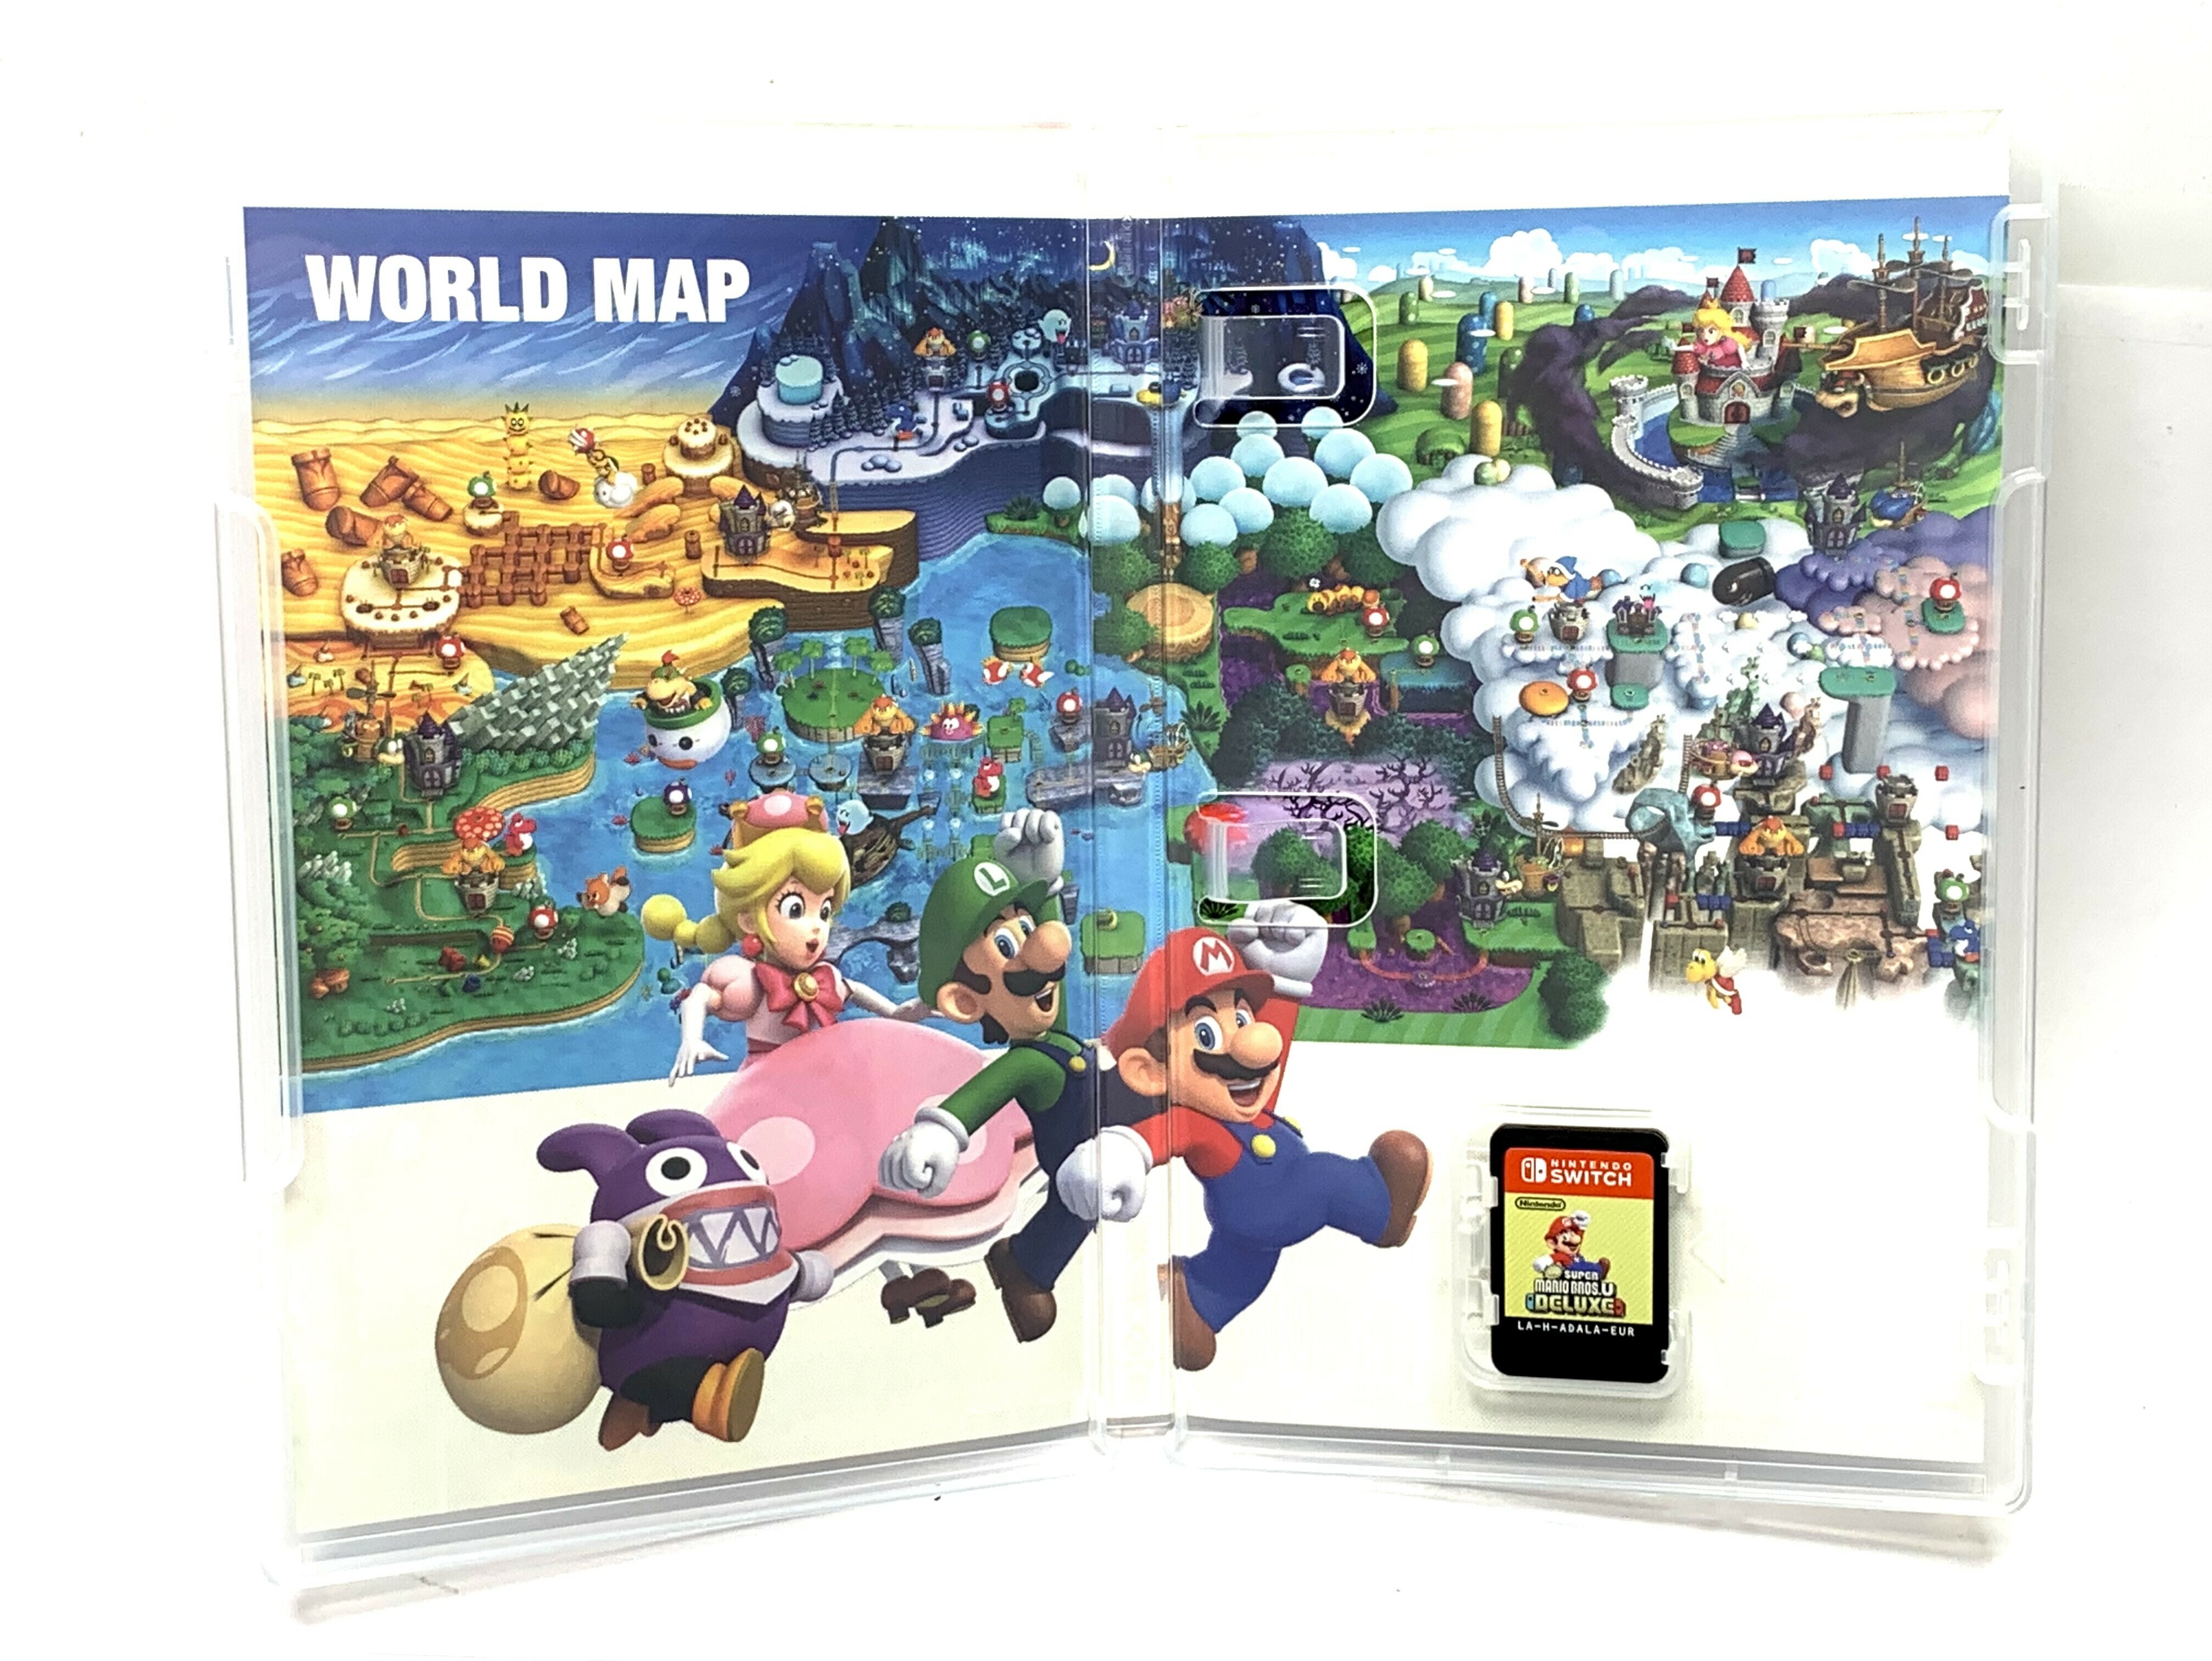 New Super Mario Bros. U Deluxe (Nintendo Switch), Nintendo Switch 